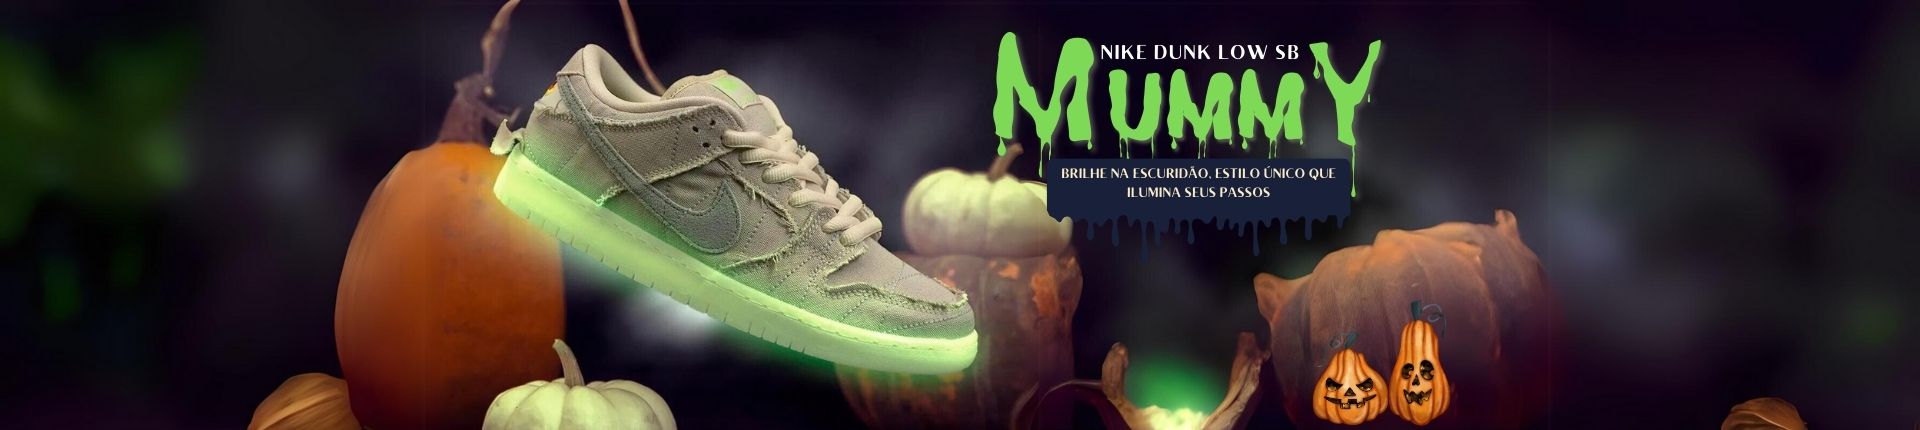 Full Banner - Nike Dunk Mummy